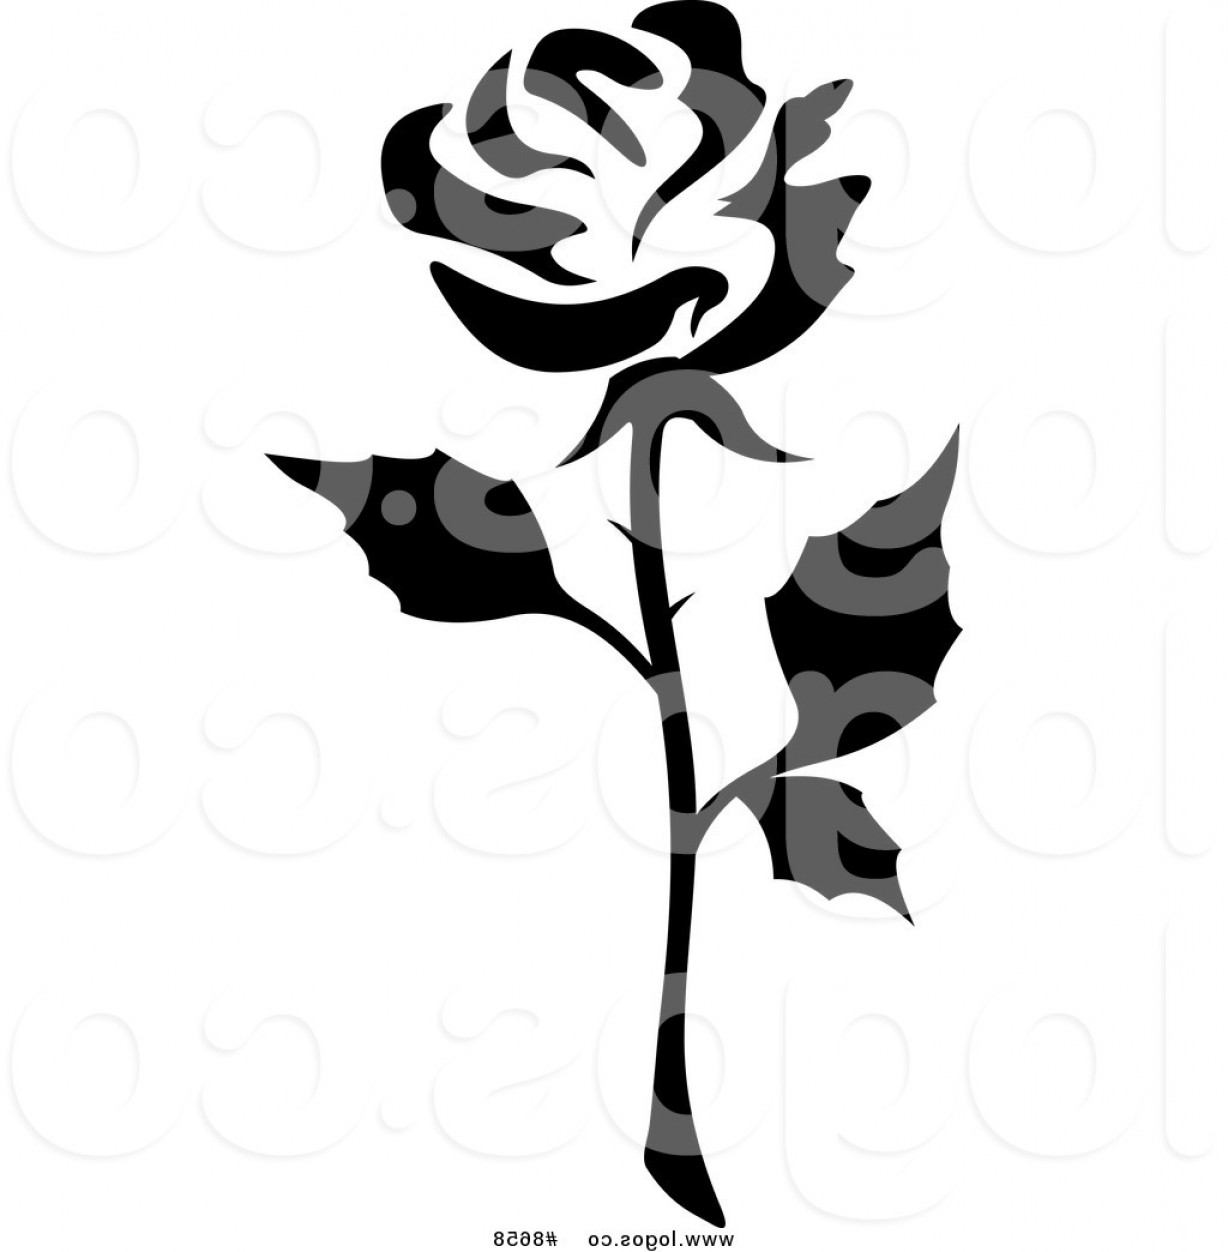 Single black rose.